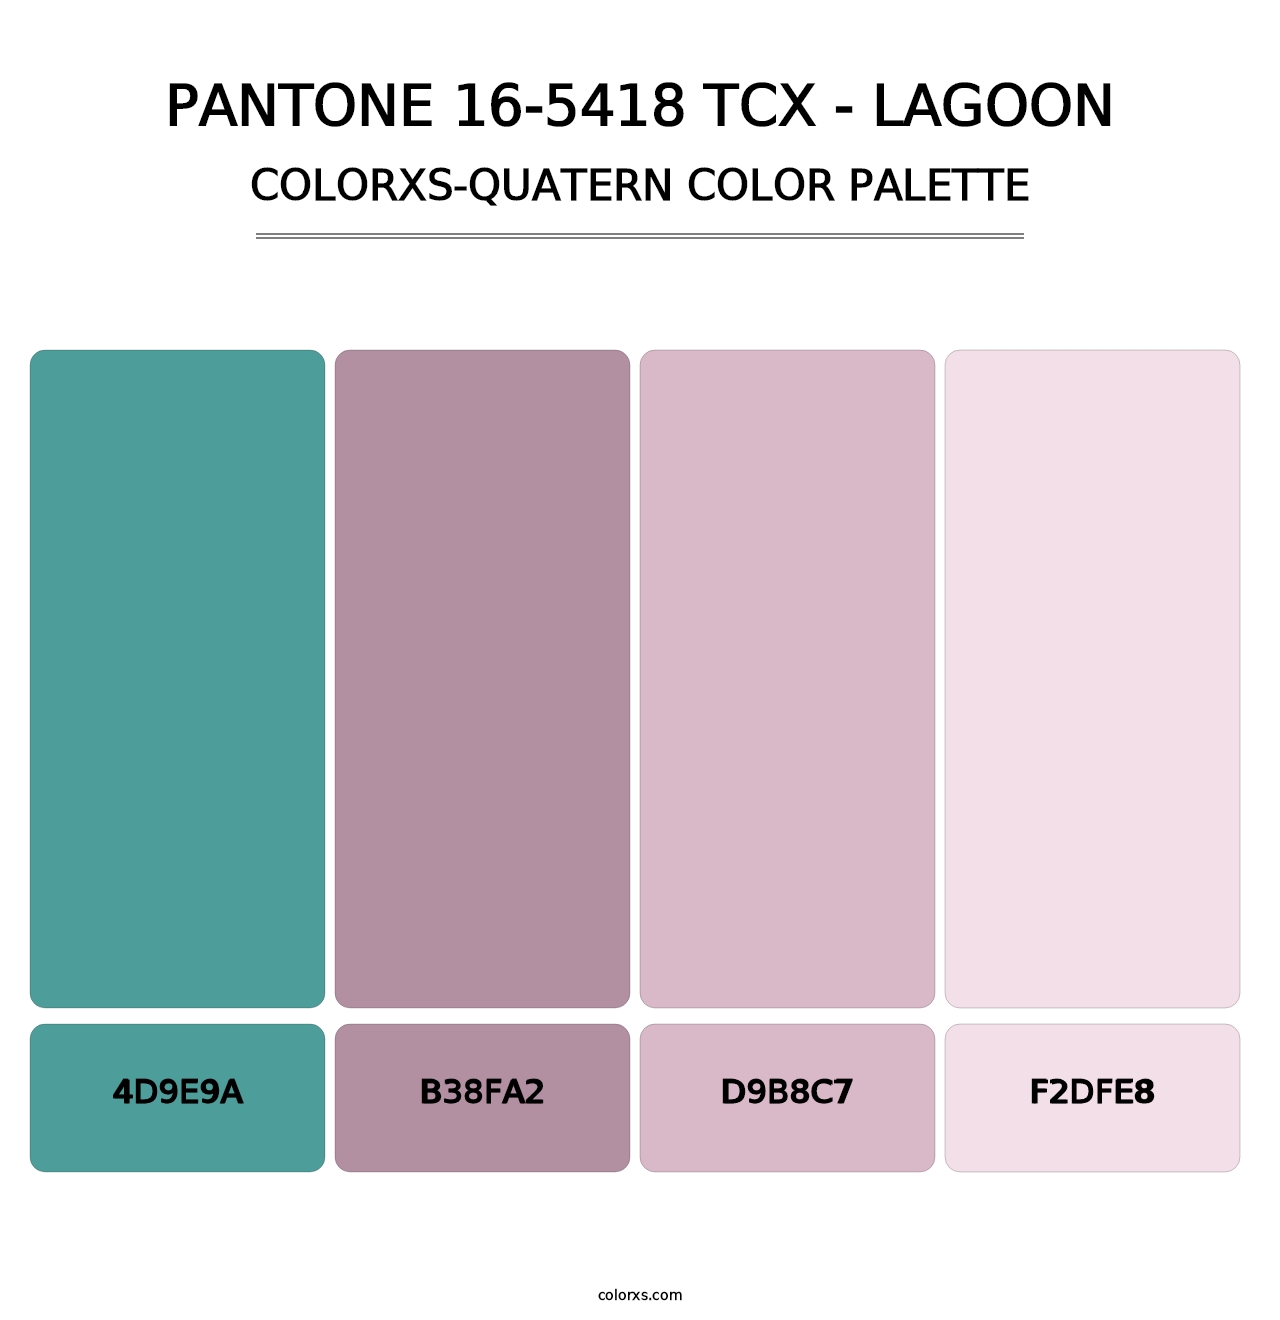 PANTONE 16-5418 TCX - Lagoon - Colorxs Quatern Palette